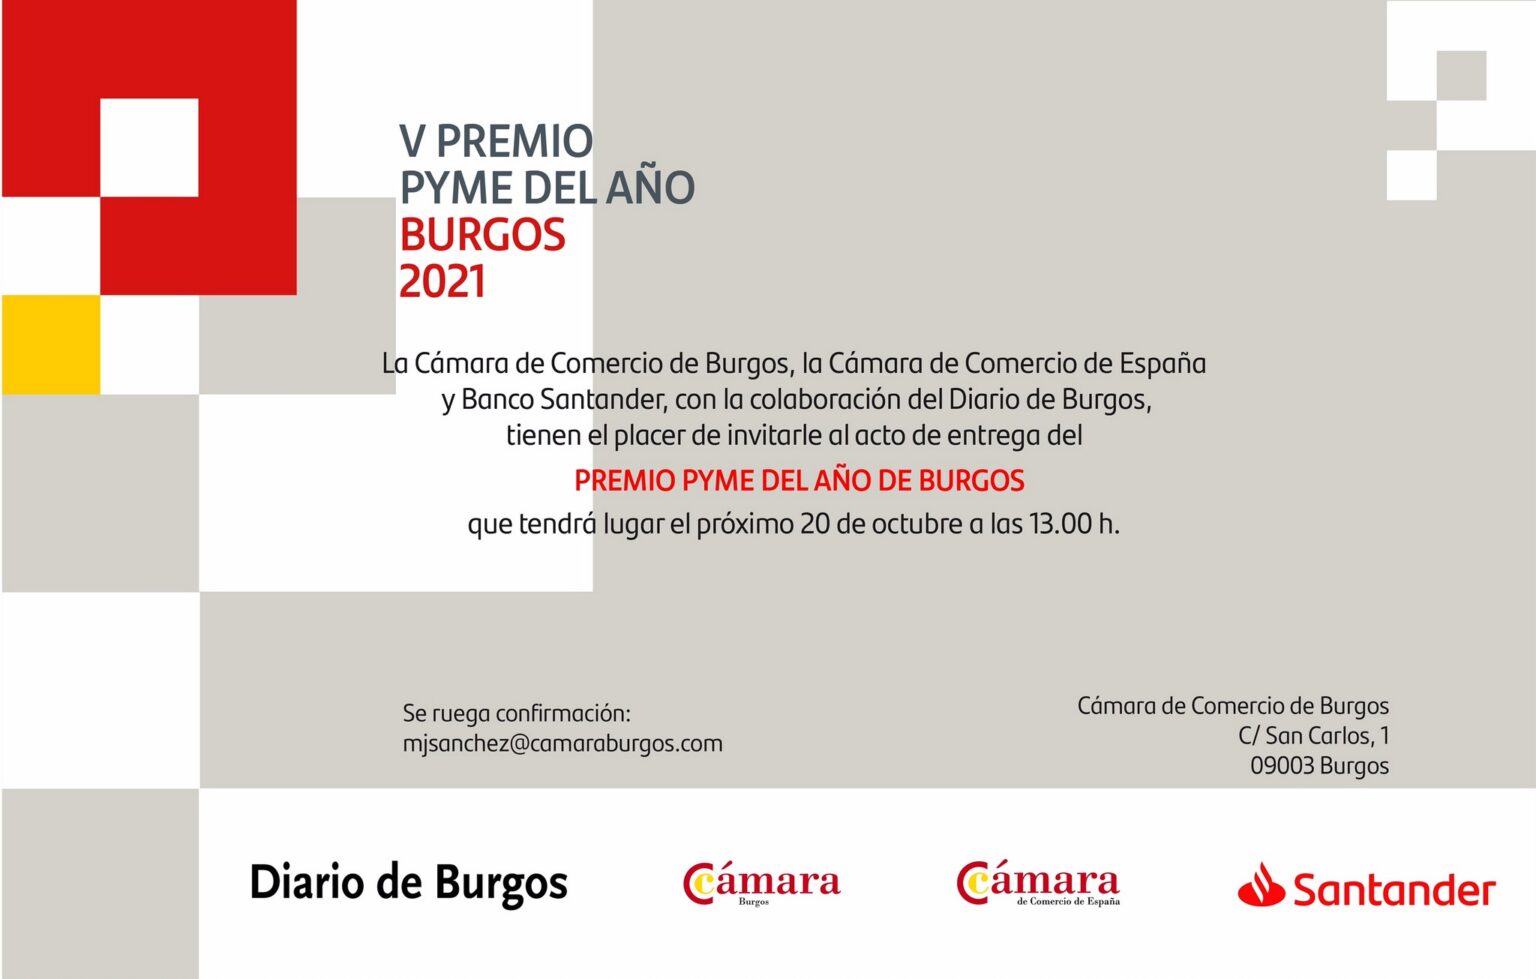 BURGOS INVITACION 01 3 1536x979 1